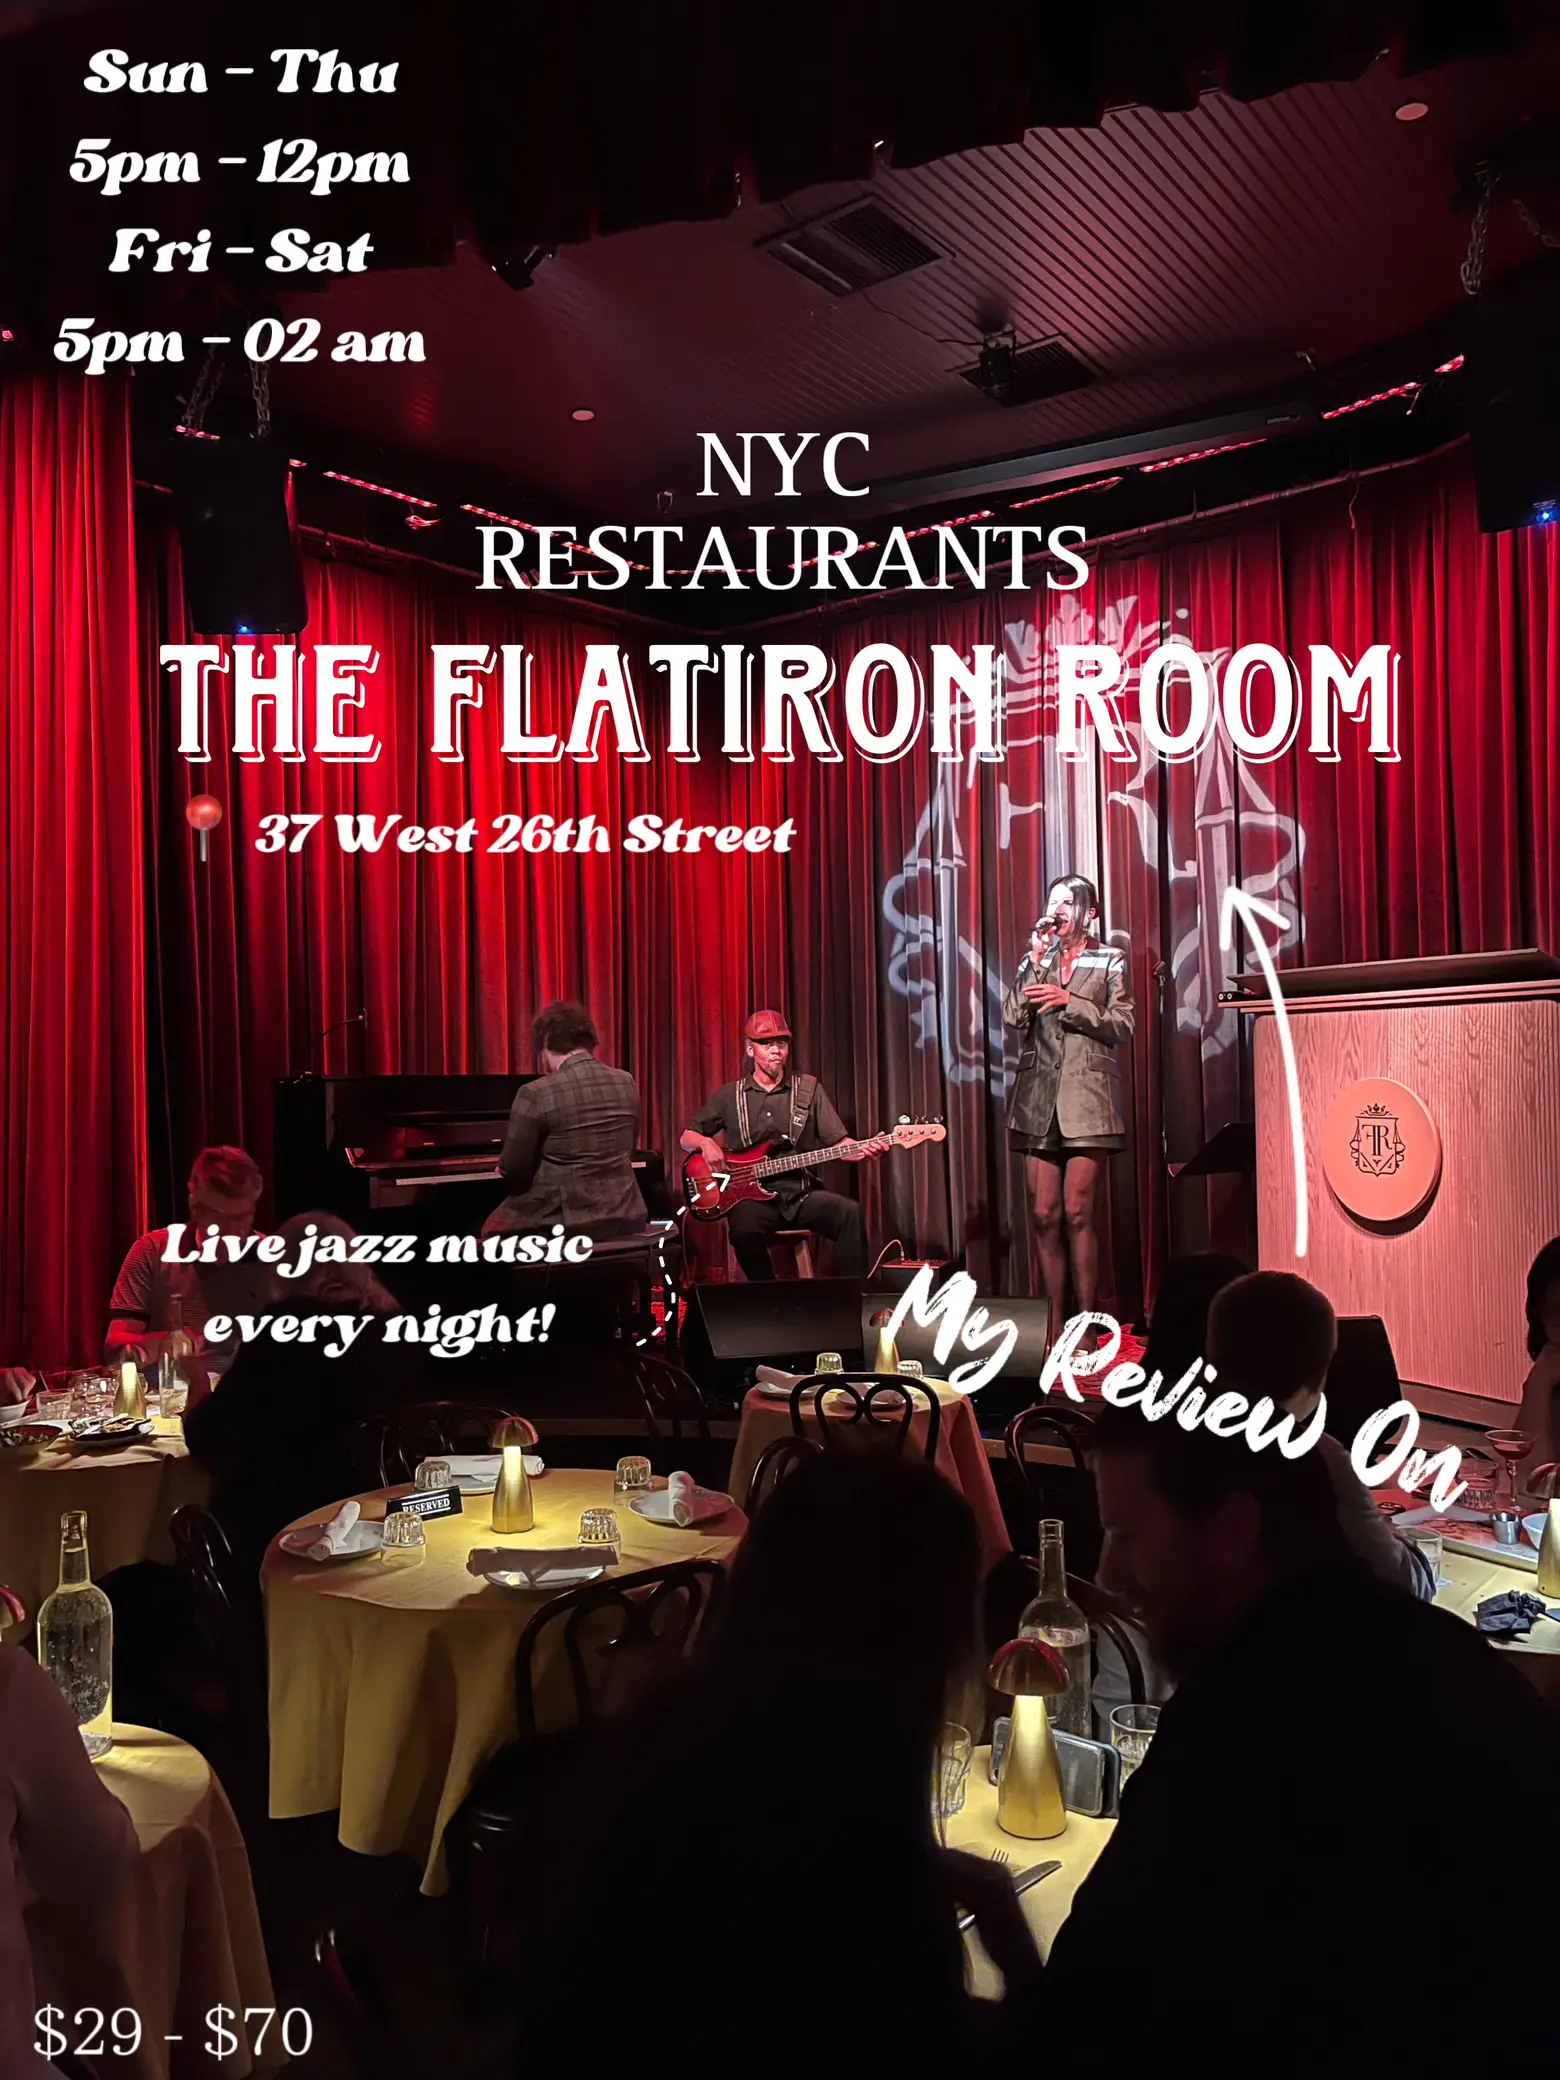 NYC JAZZ DINNER: THE FLATIRON ROOM 🎺's images